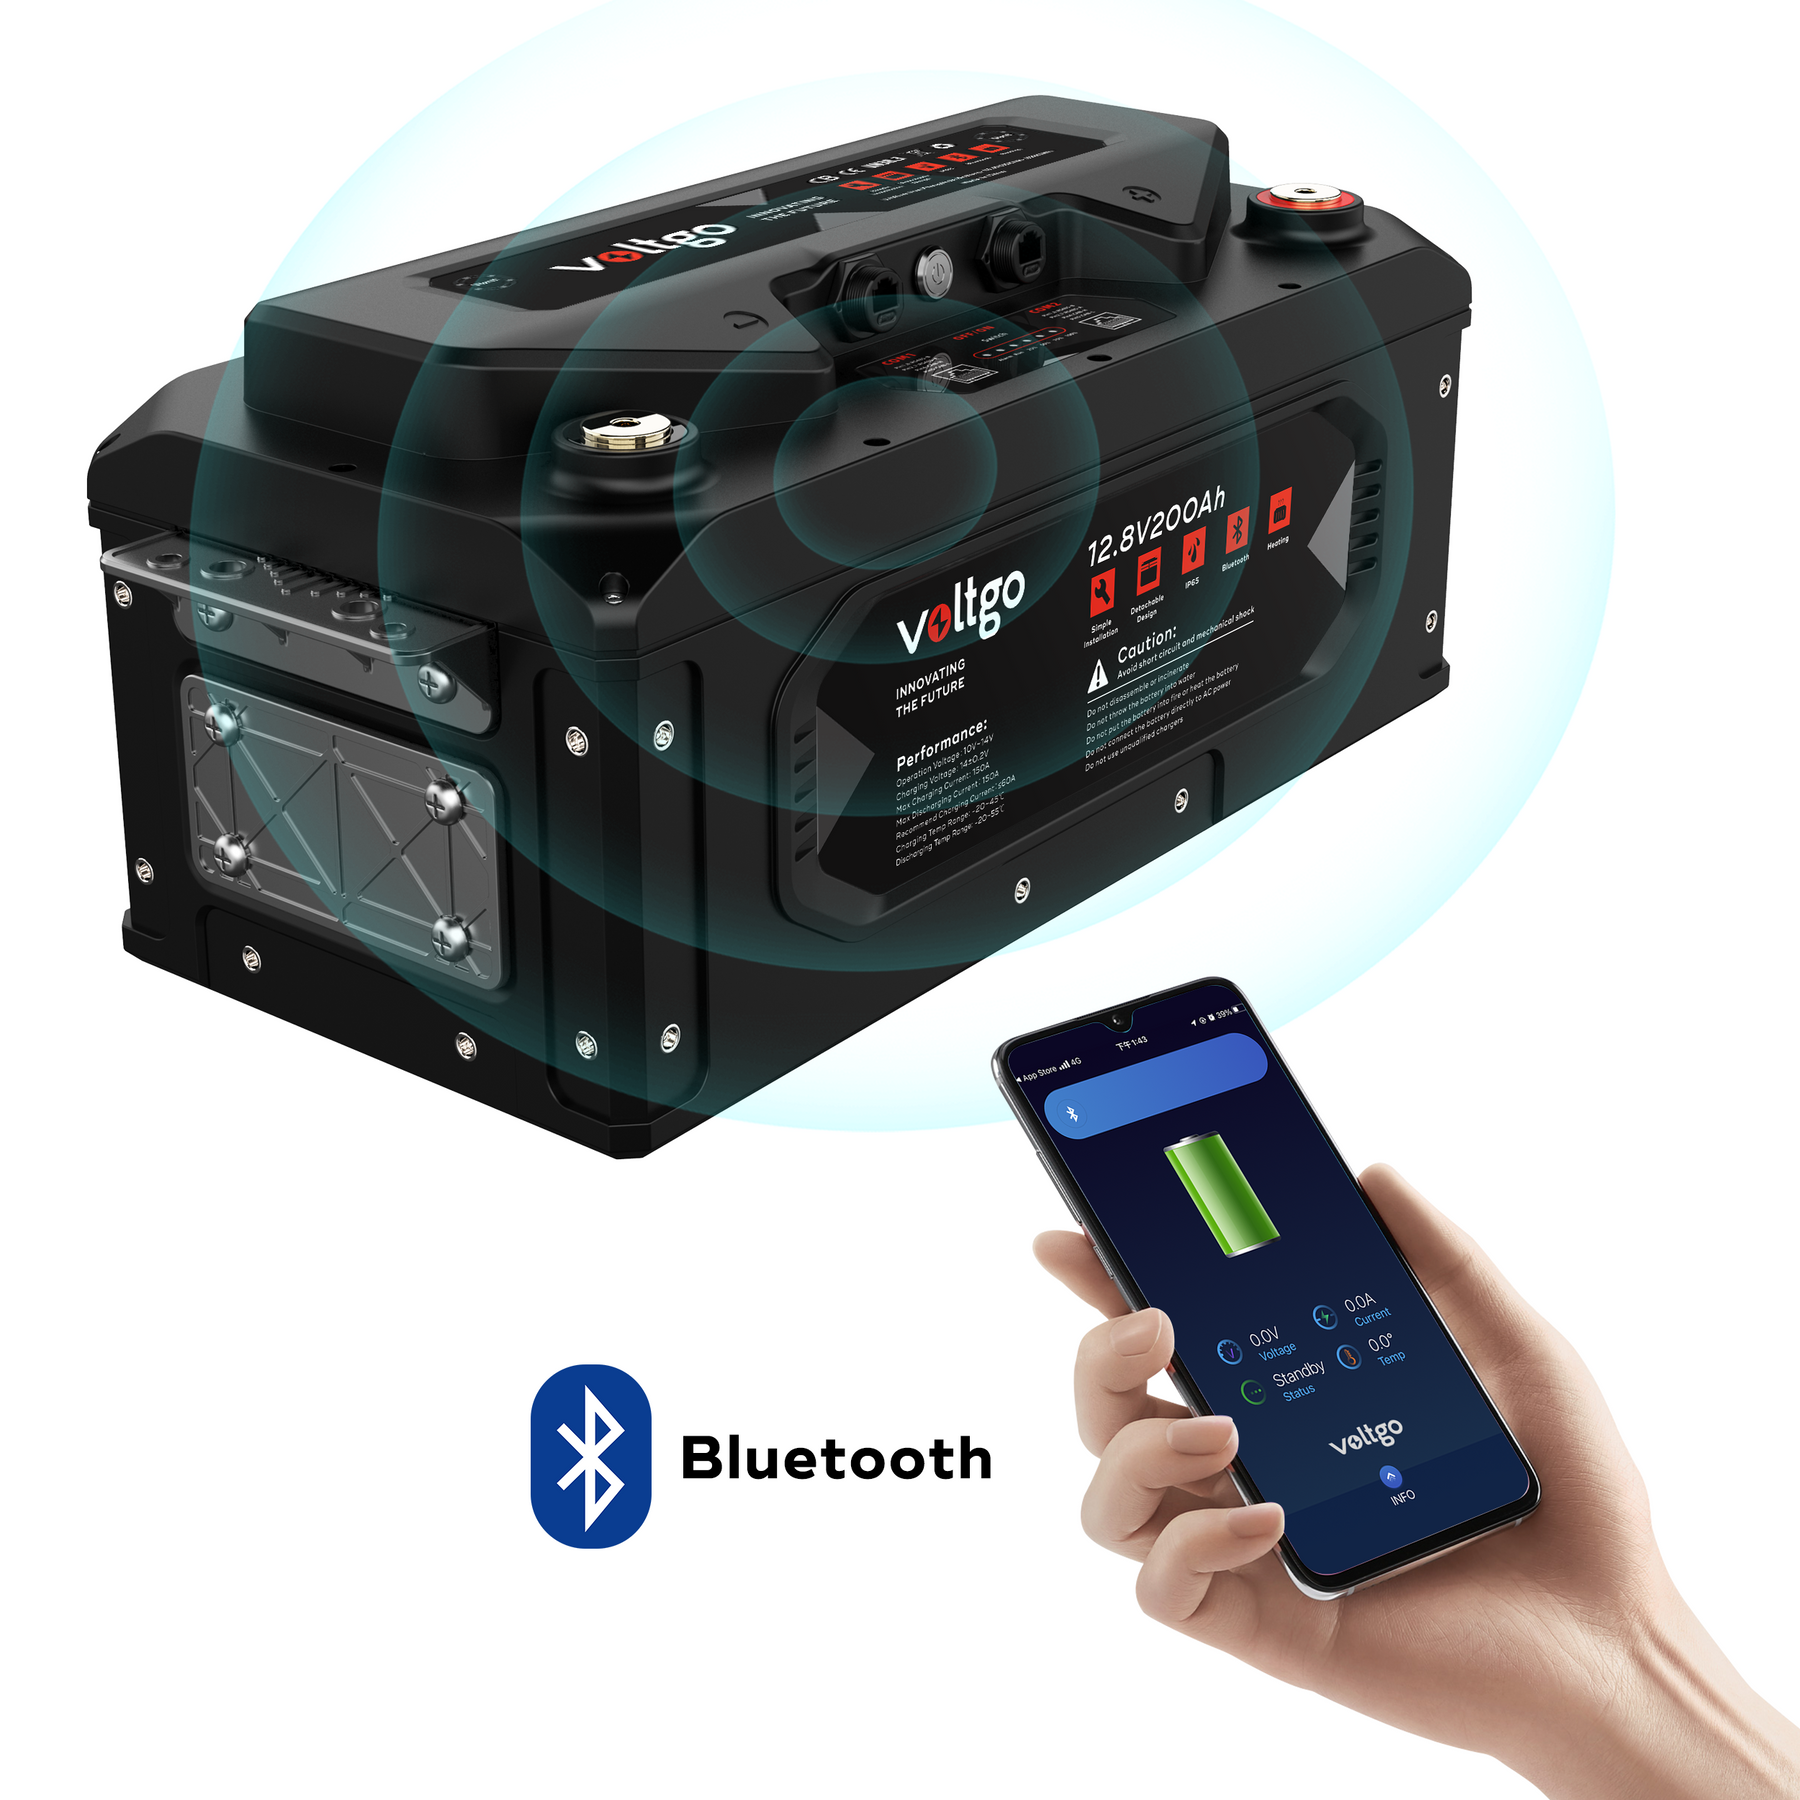 GoKWh 12V 200Ah LiFePO4 Battery Built-in Smart Bluetooth